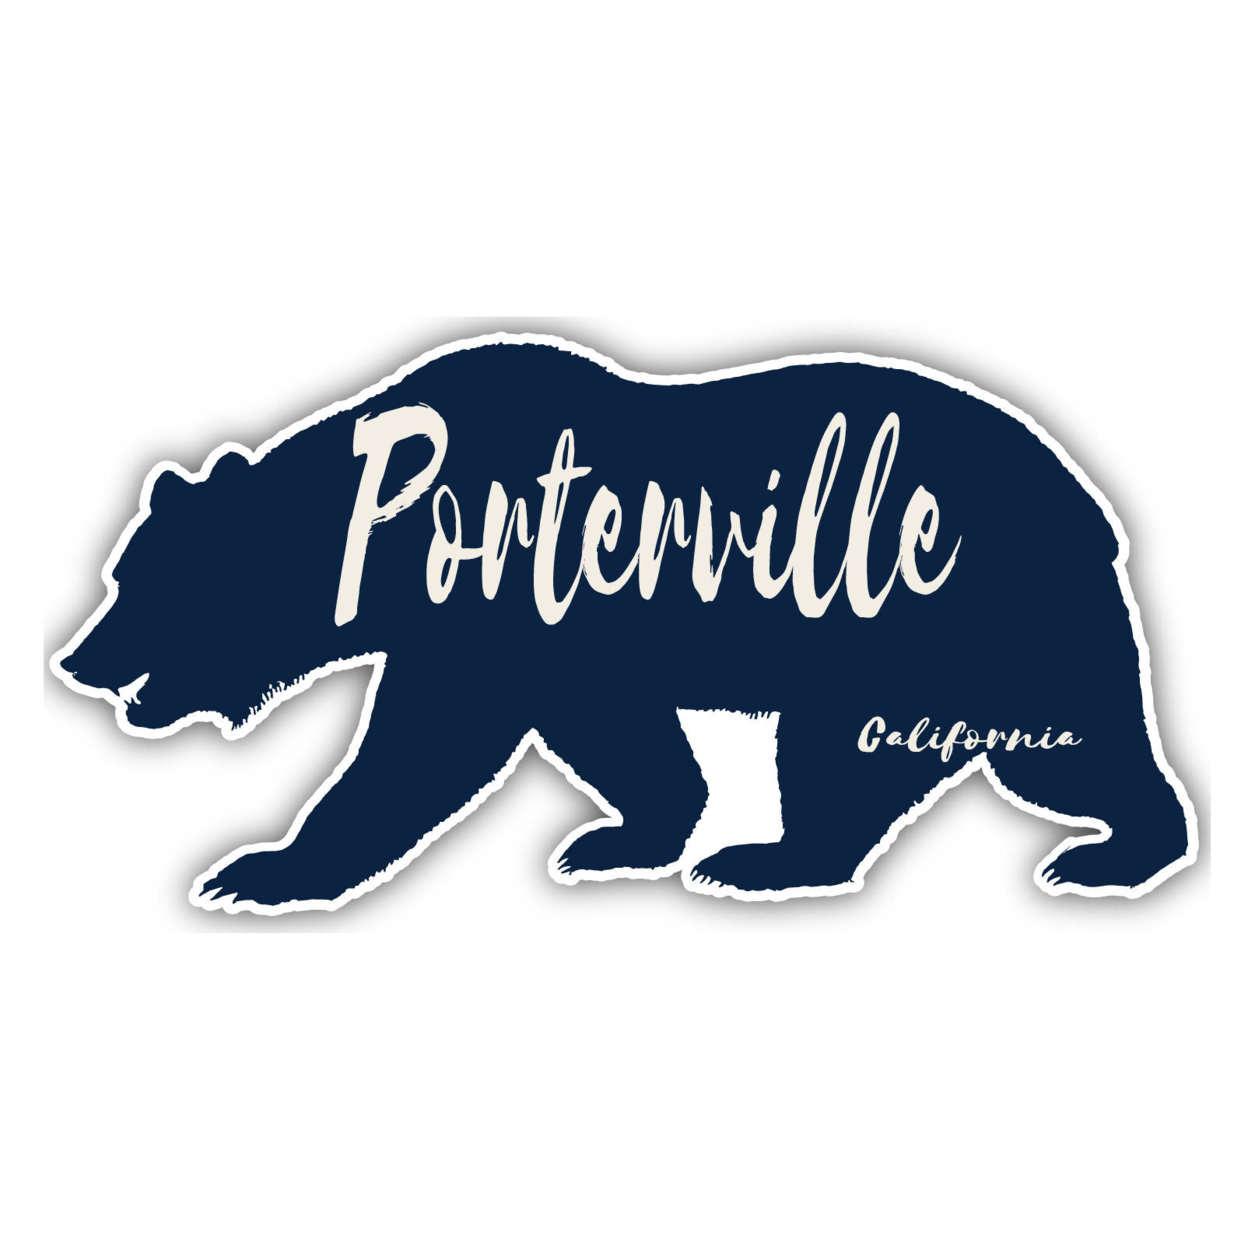 Porterville California Souvenir Decorative Stickers (Choose Theme And Size) - Single Unit, 2-Inch, Bear